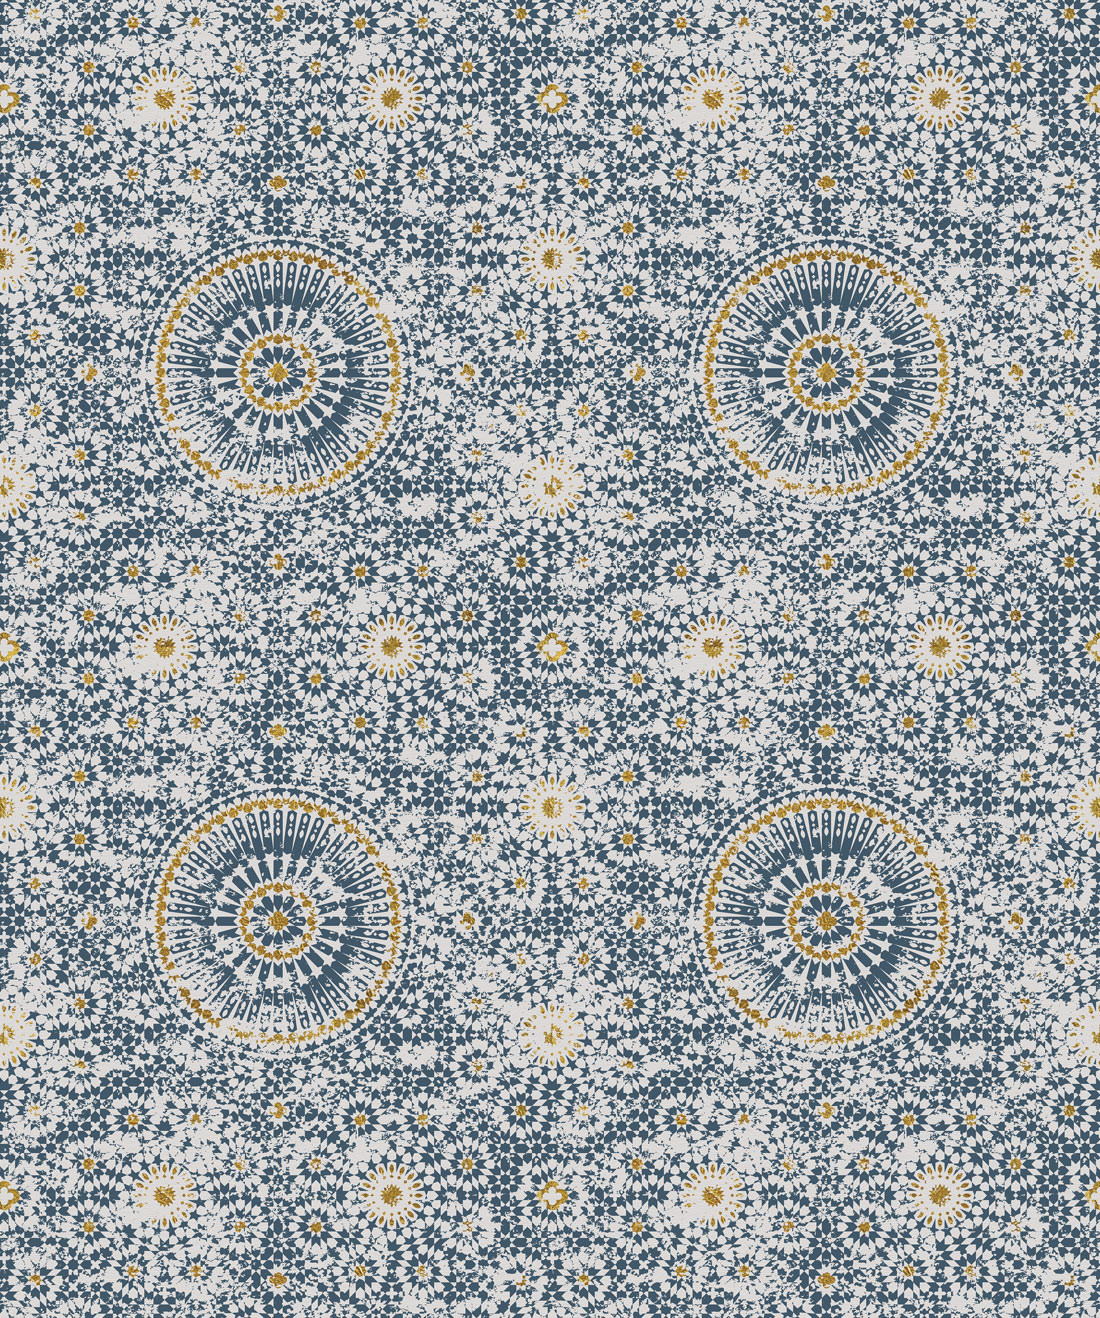 Dot Art Mandala Fabric, Wallpaper and Home Decor